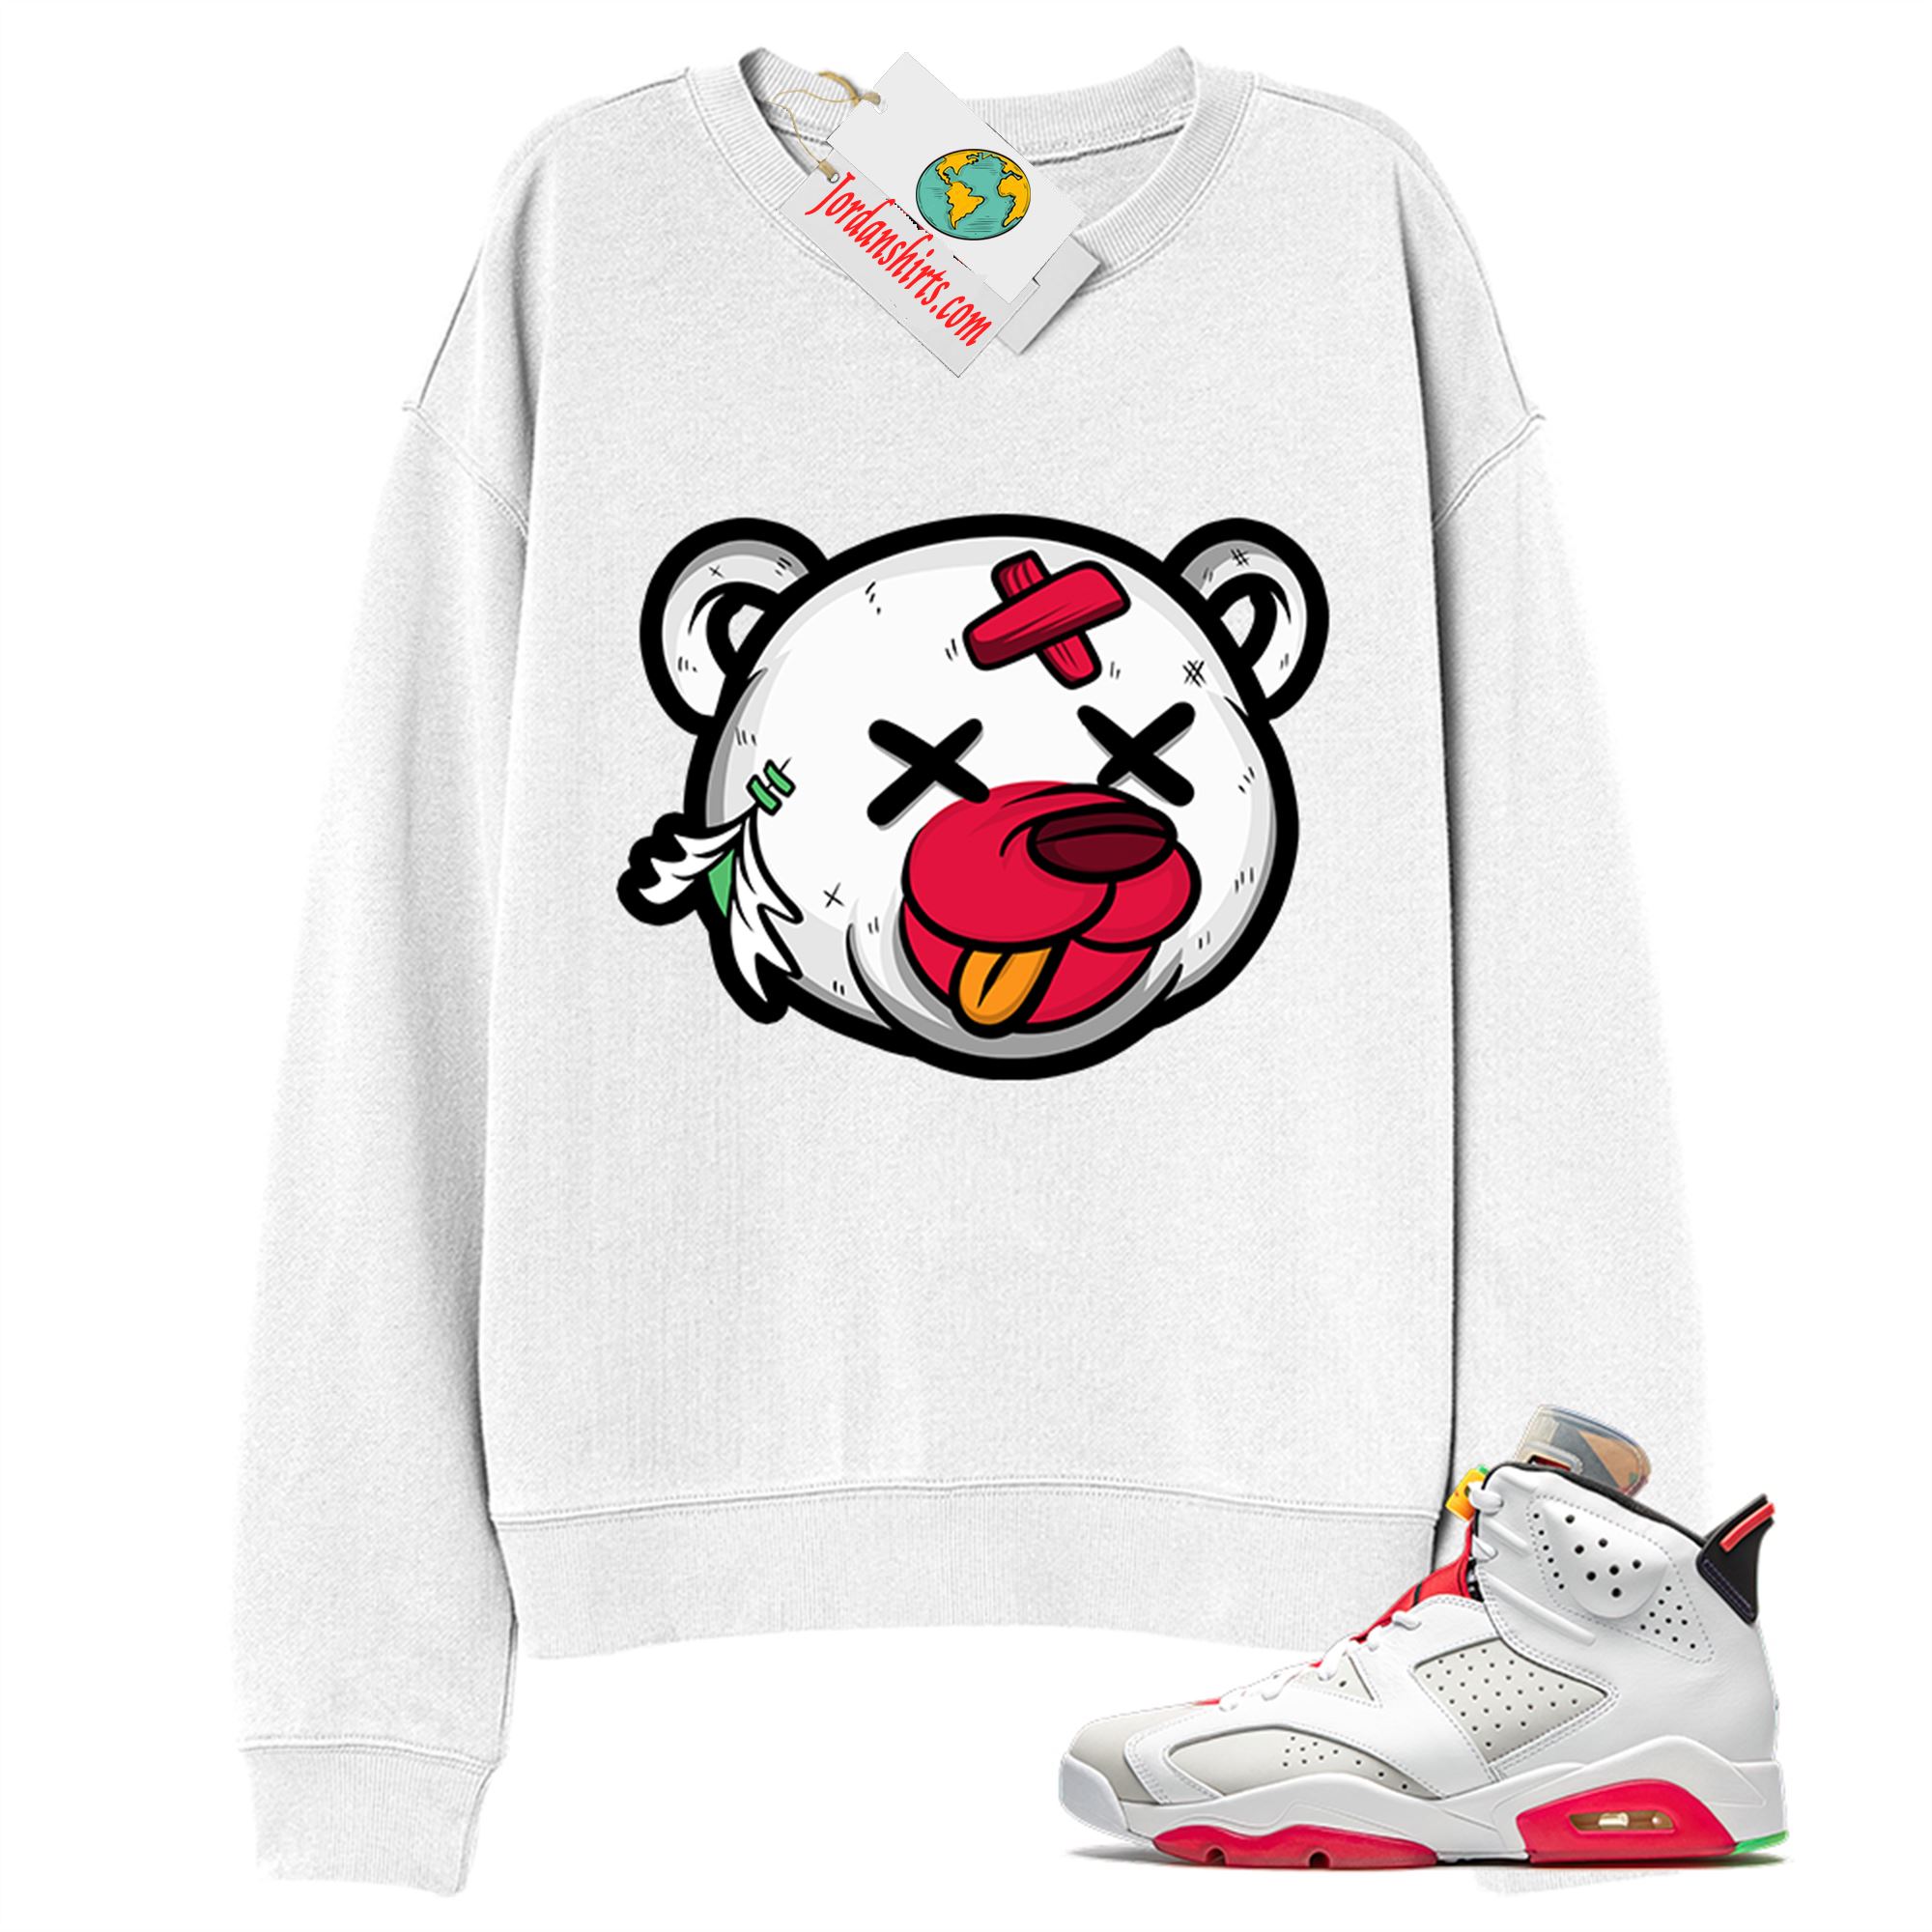 Jordan 6 Sweatshirt, Teddy Bear Head White Sweatshirt Air Jordan 6 Hare 6s Size Up To 5xl